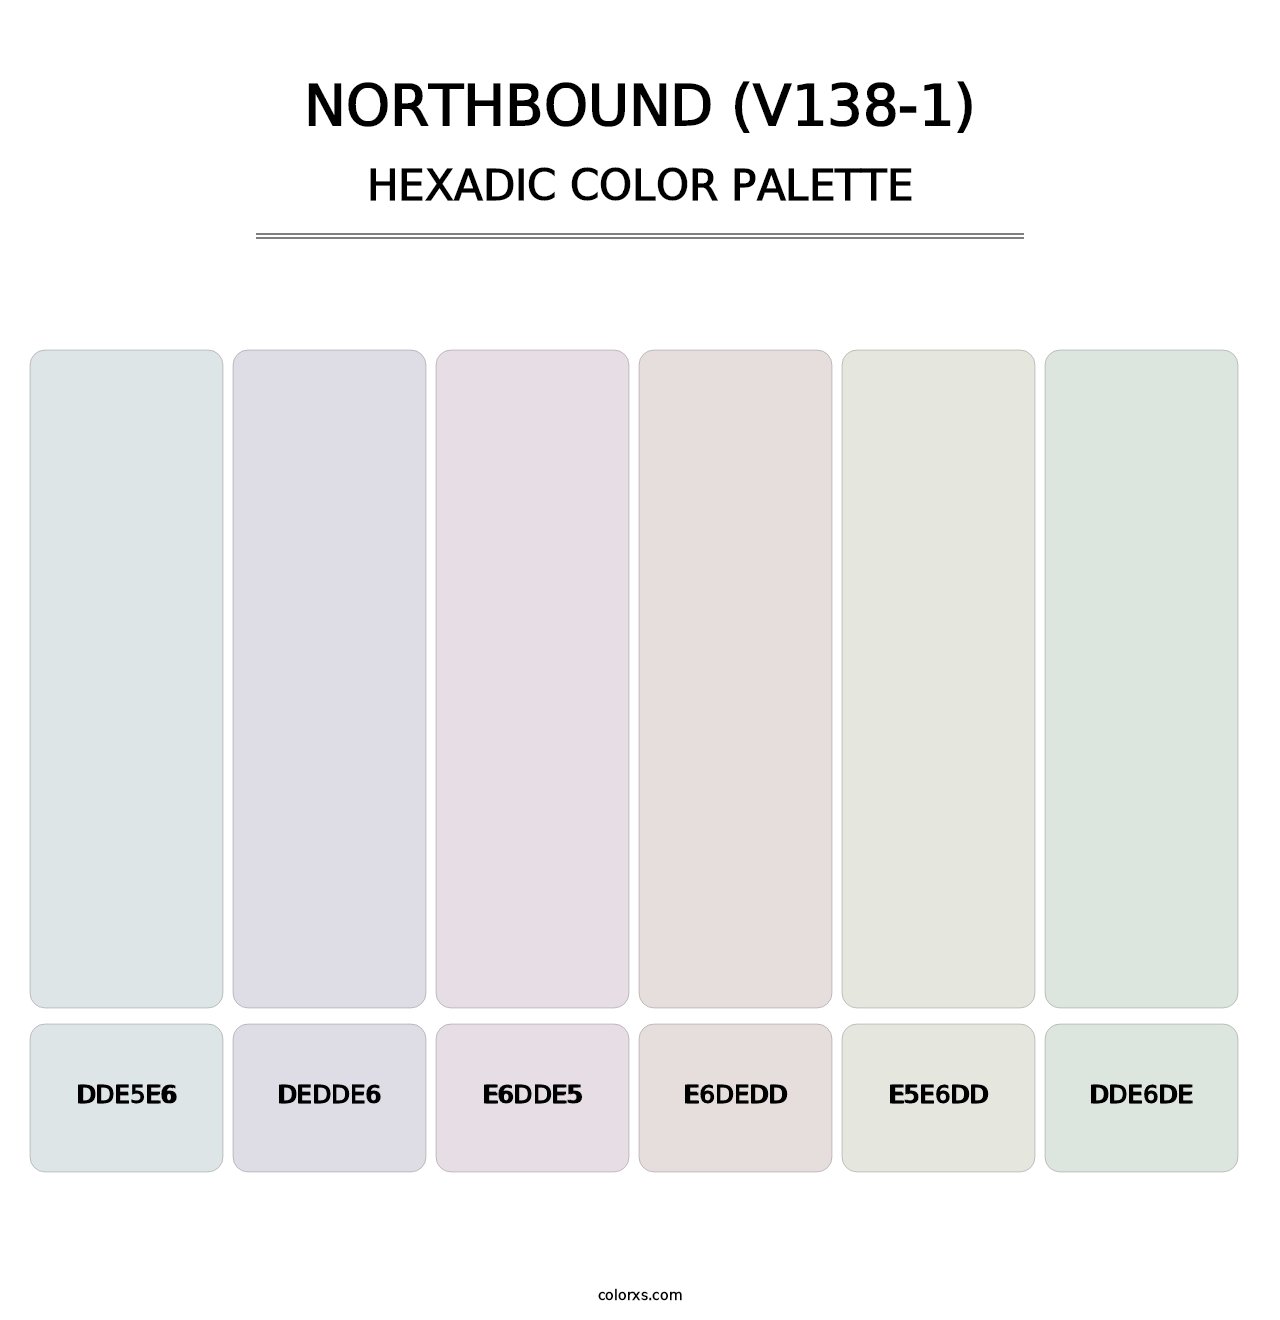 Northbound (V138-1) - Hexadic Color Palette